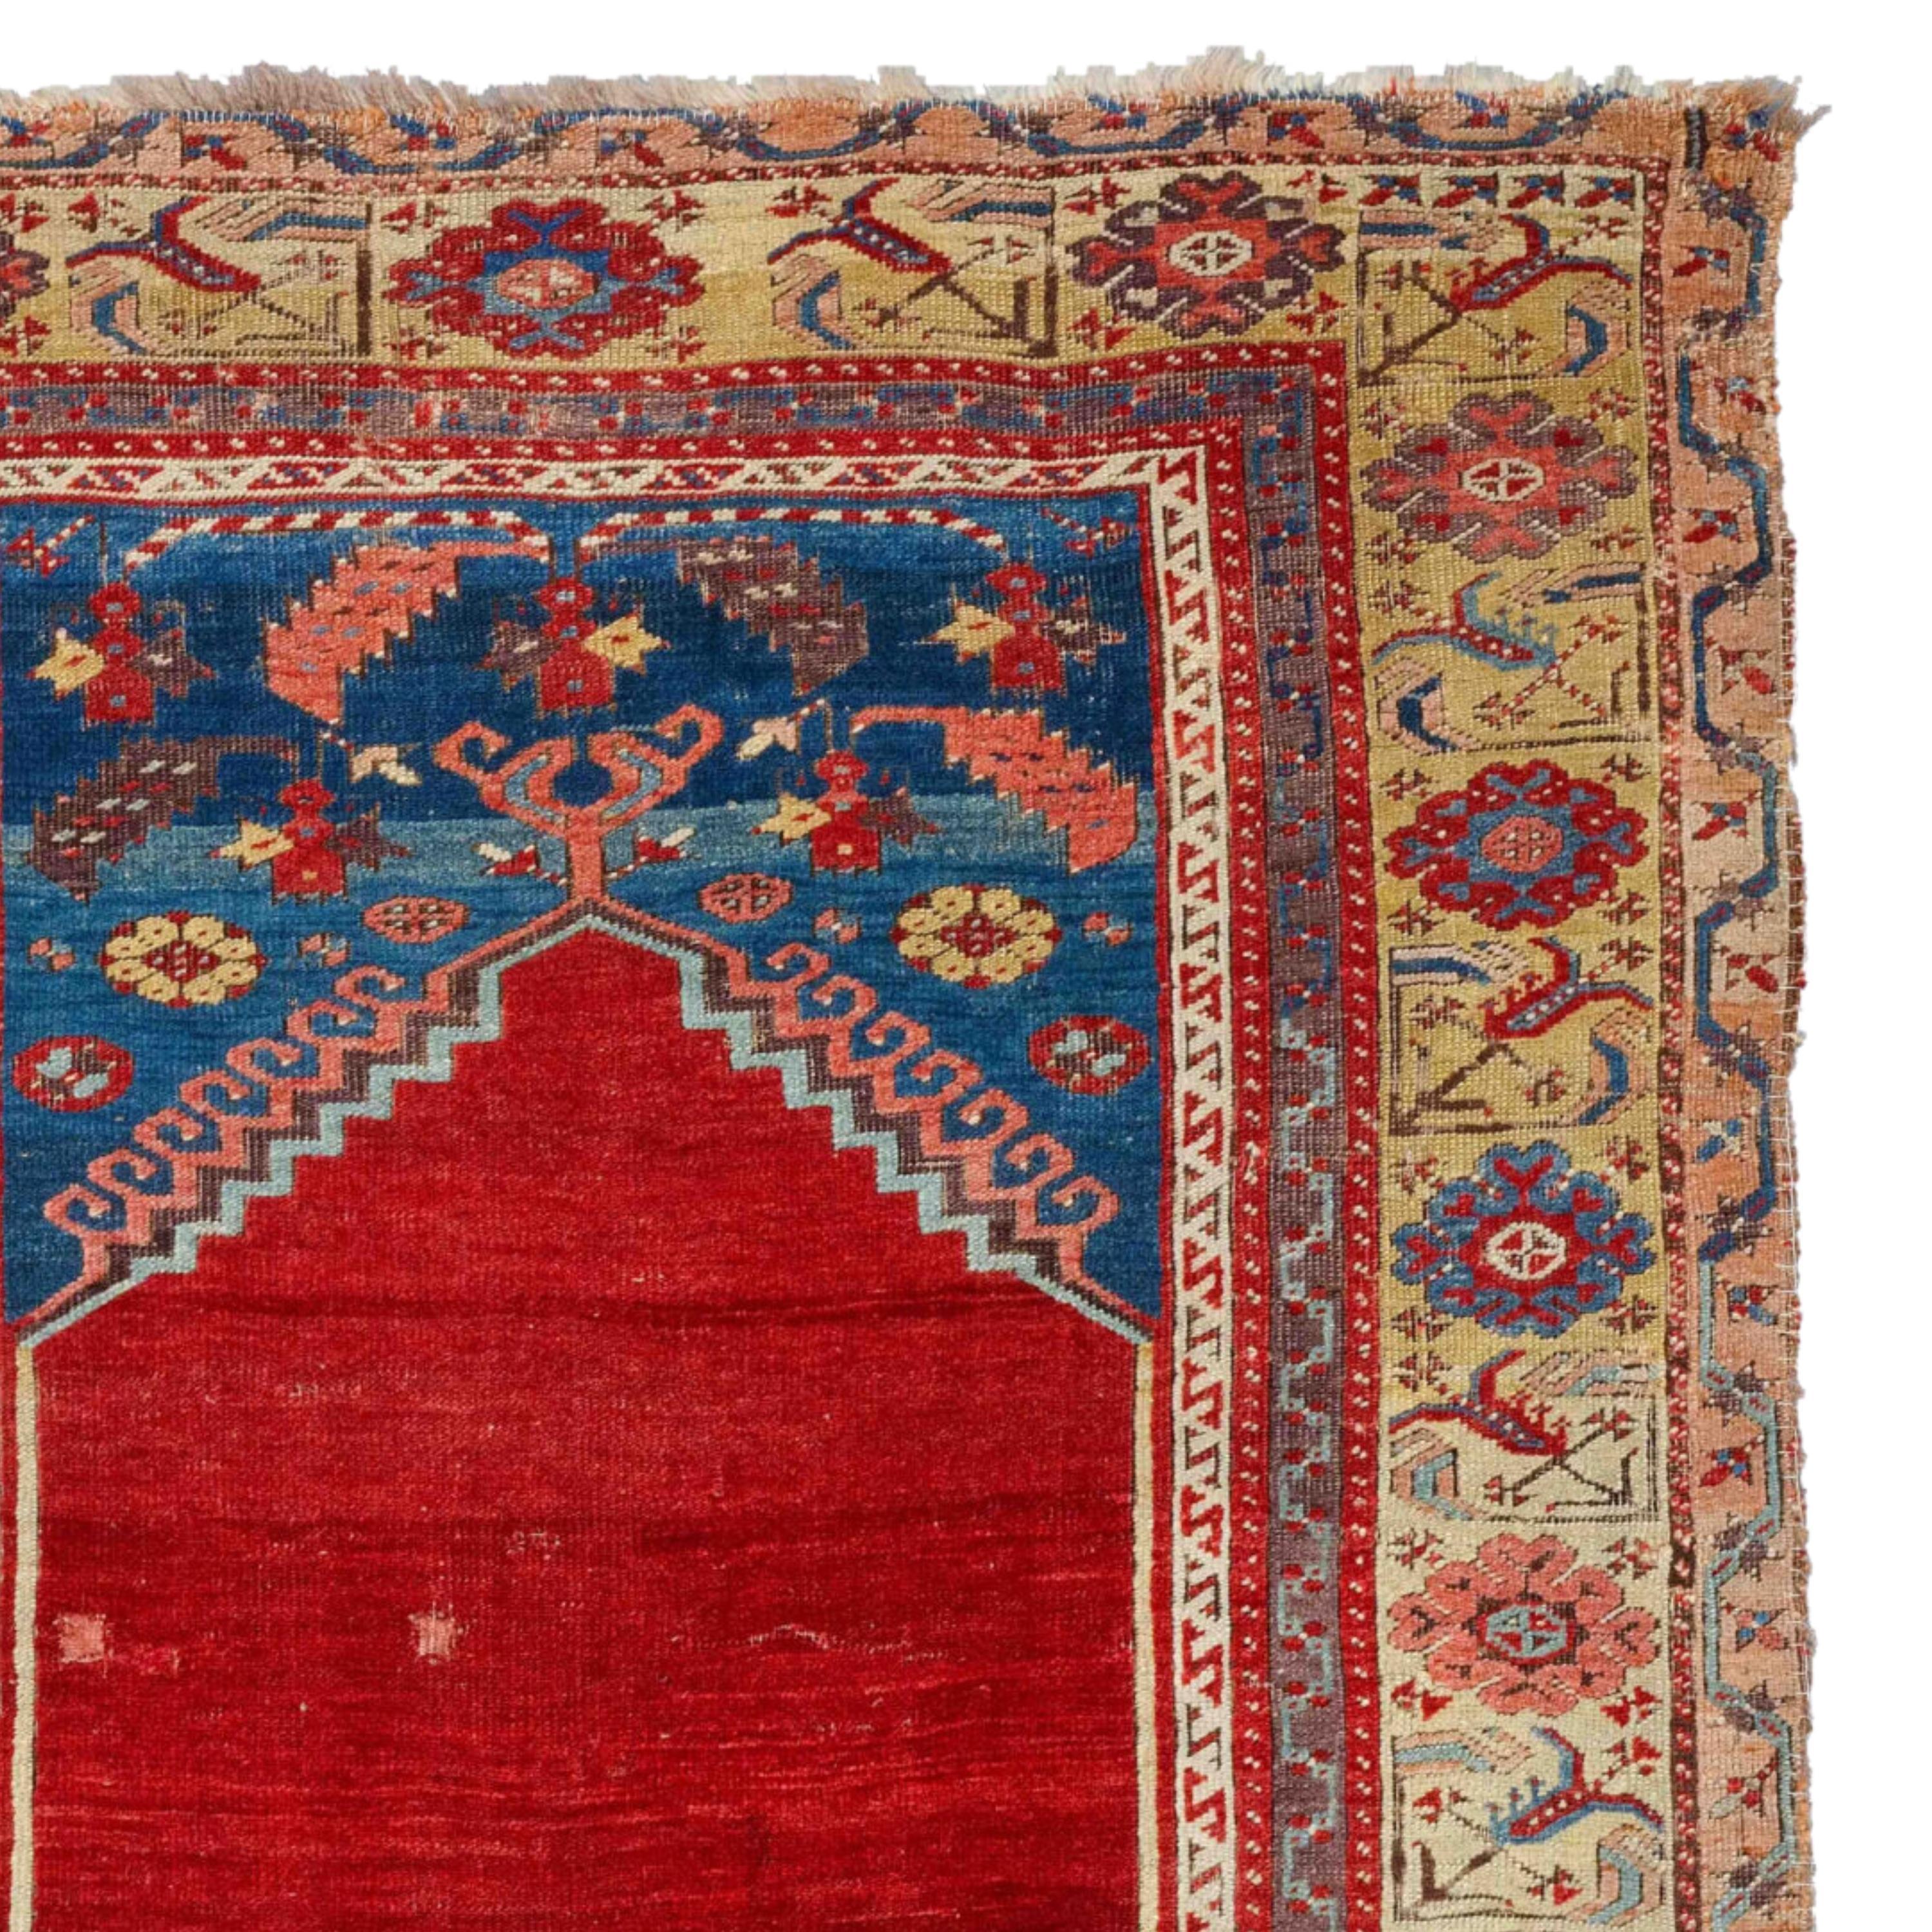 Turkish Antique Konya Ladik Rug - Late 18th Century Central Anatolian Konya Ladik Rug For Sale